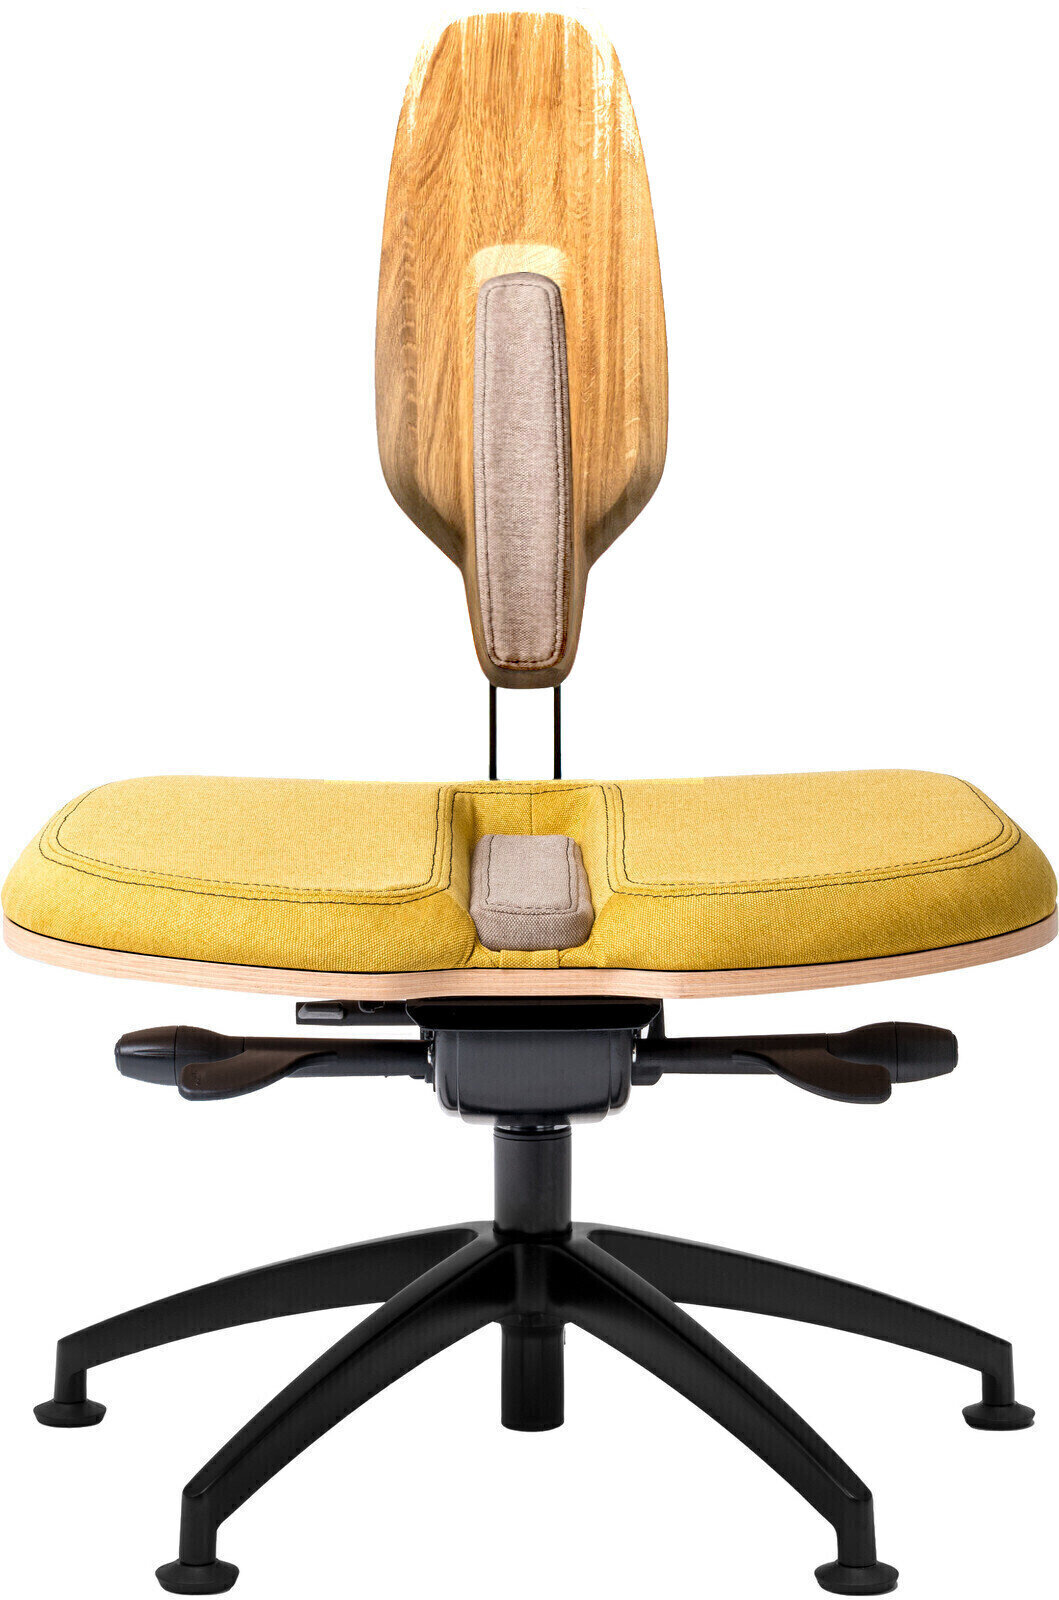 Studio-møbler Neseda Premium Yellow